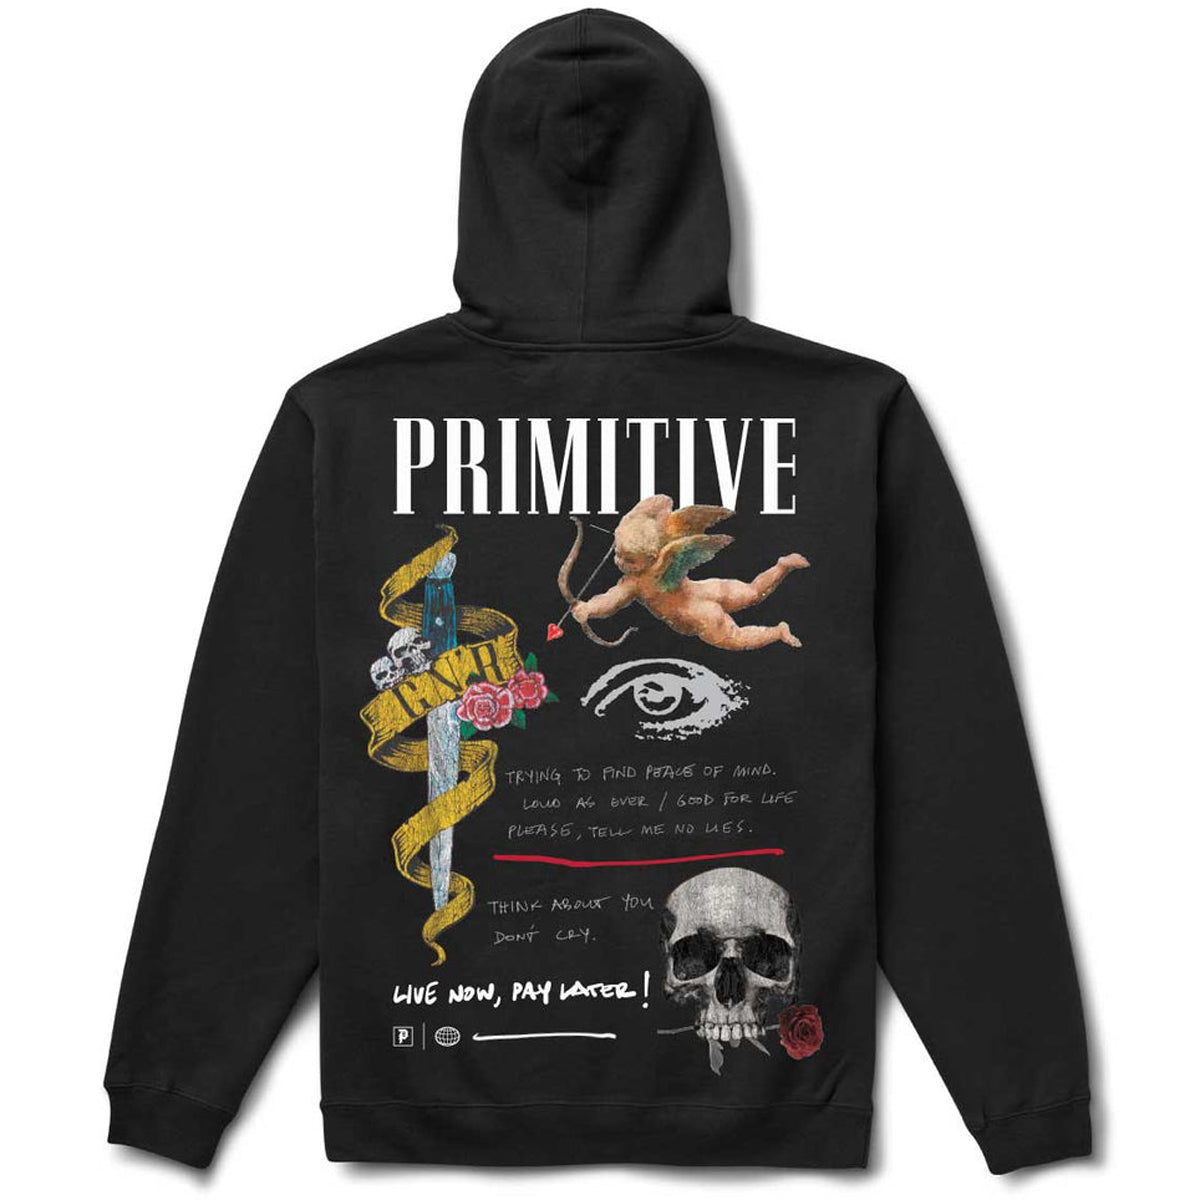 Primitive x Guns N' Roses Don't Cry Hoodie - Black image 1